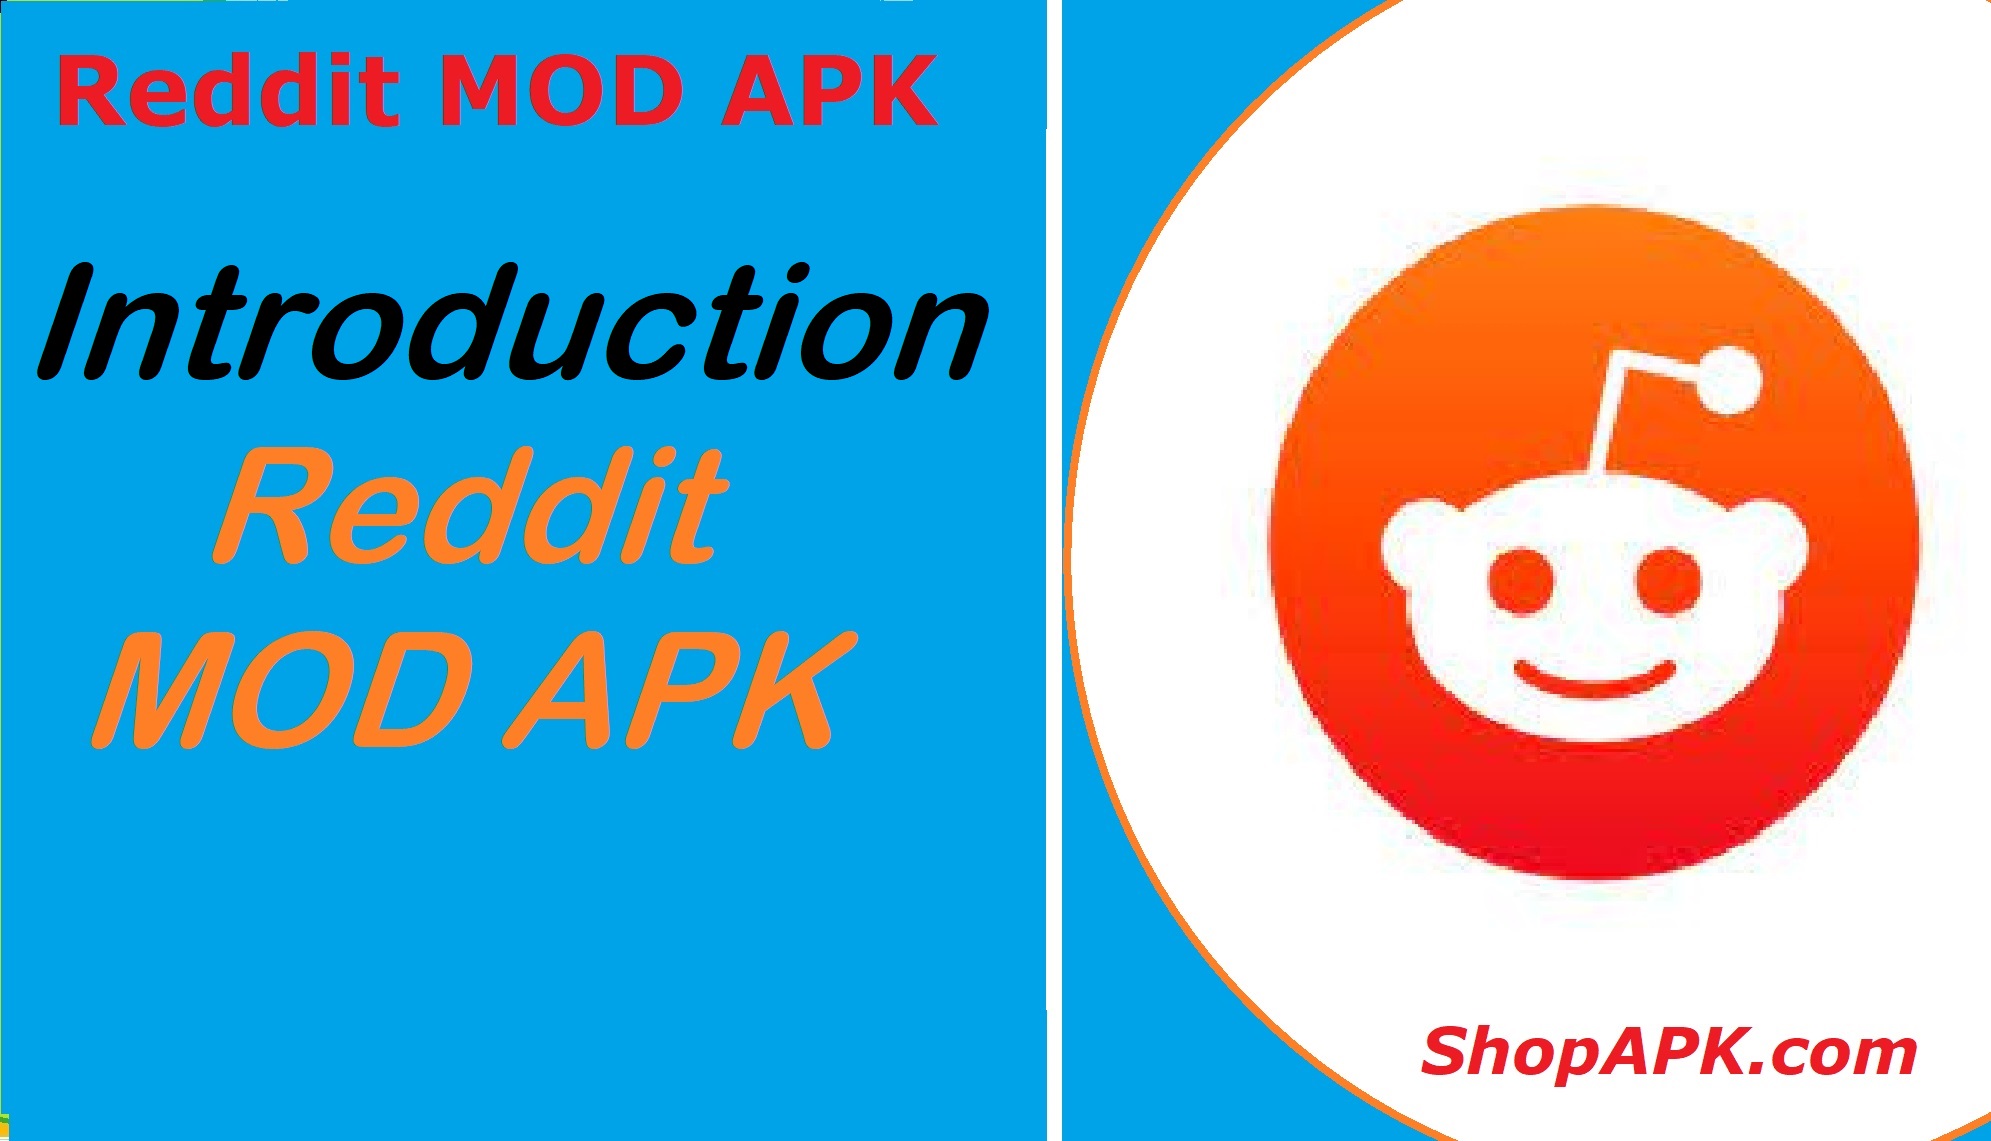 Introduction Reddit MOD APK